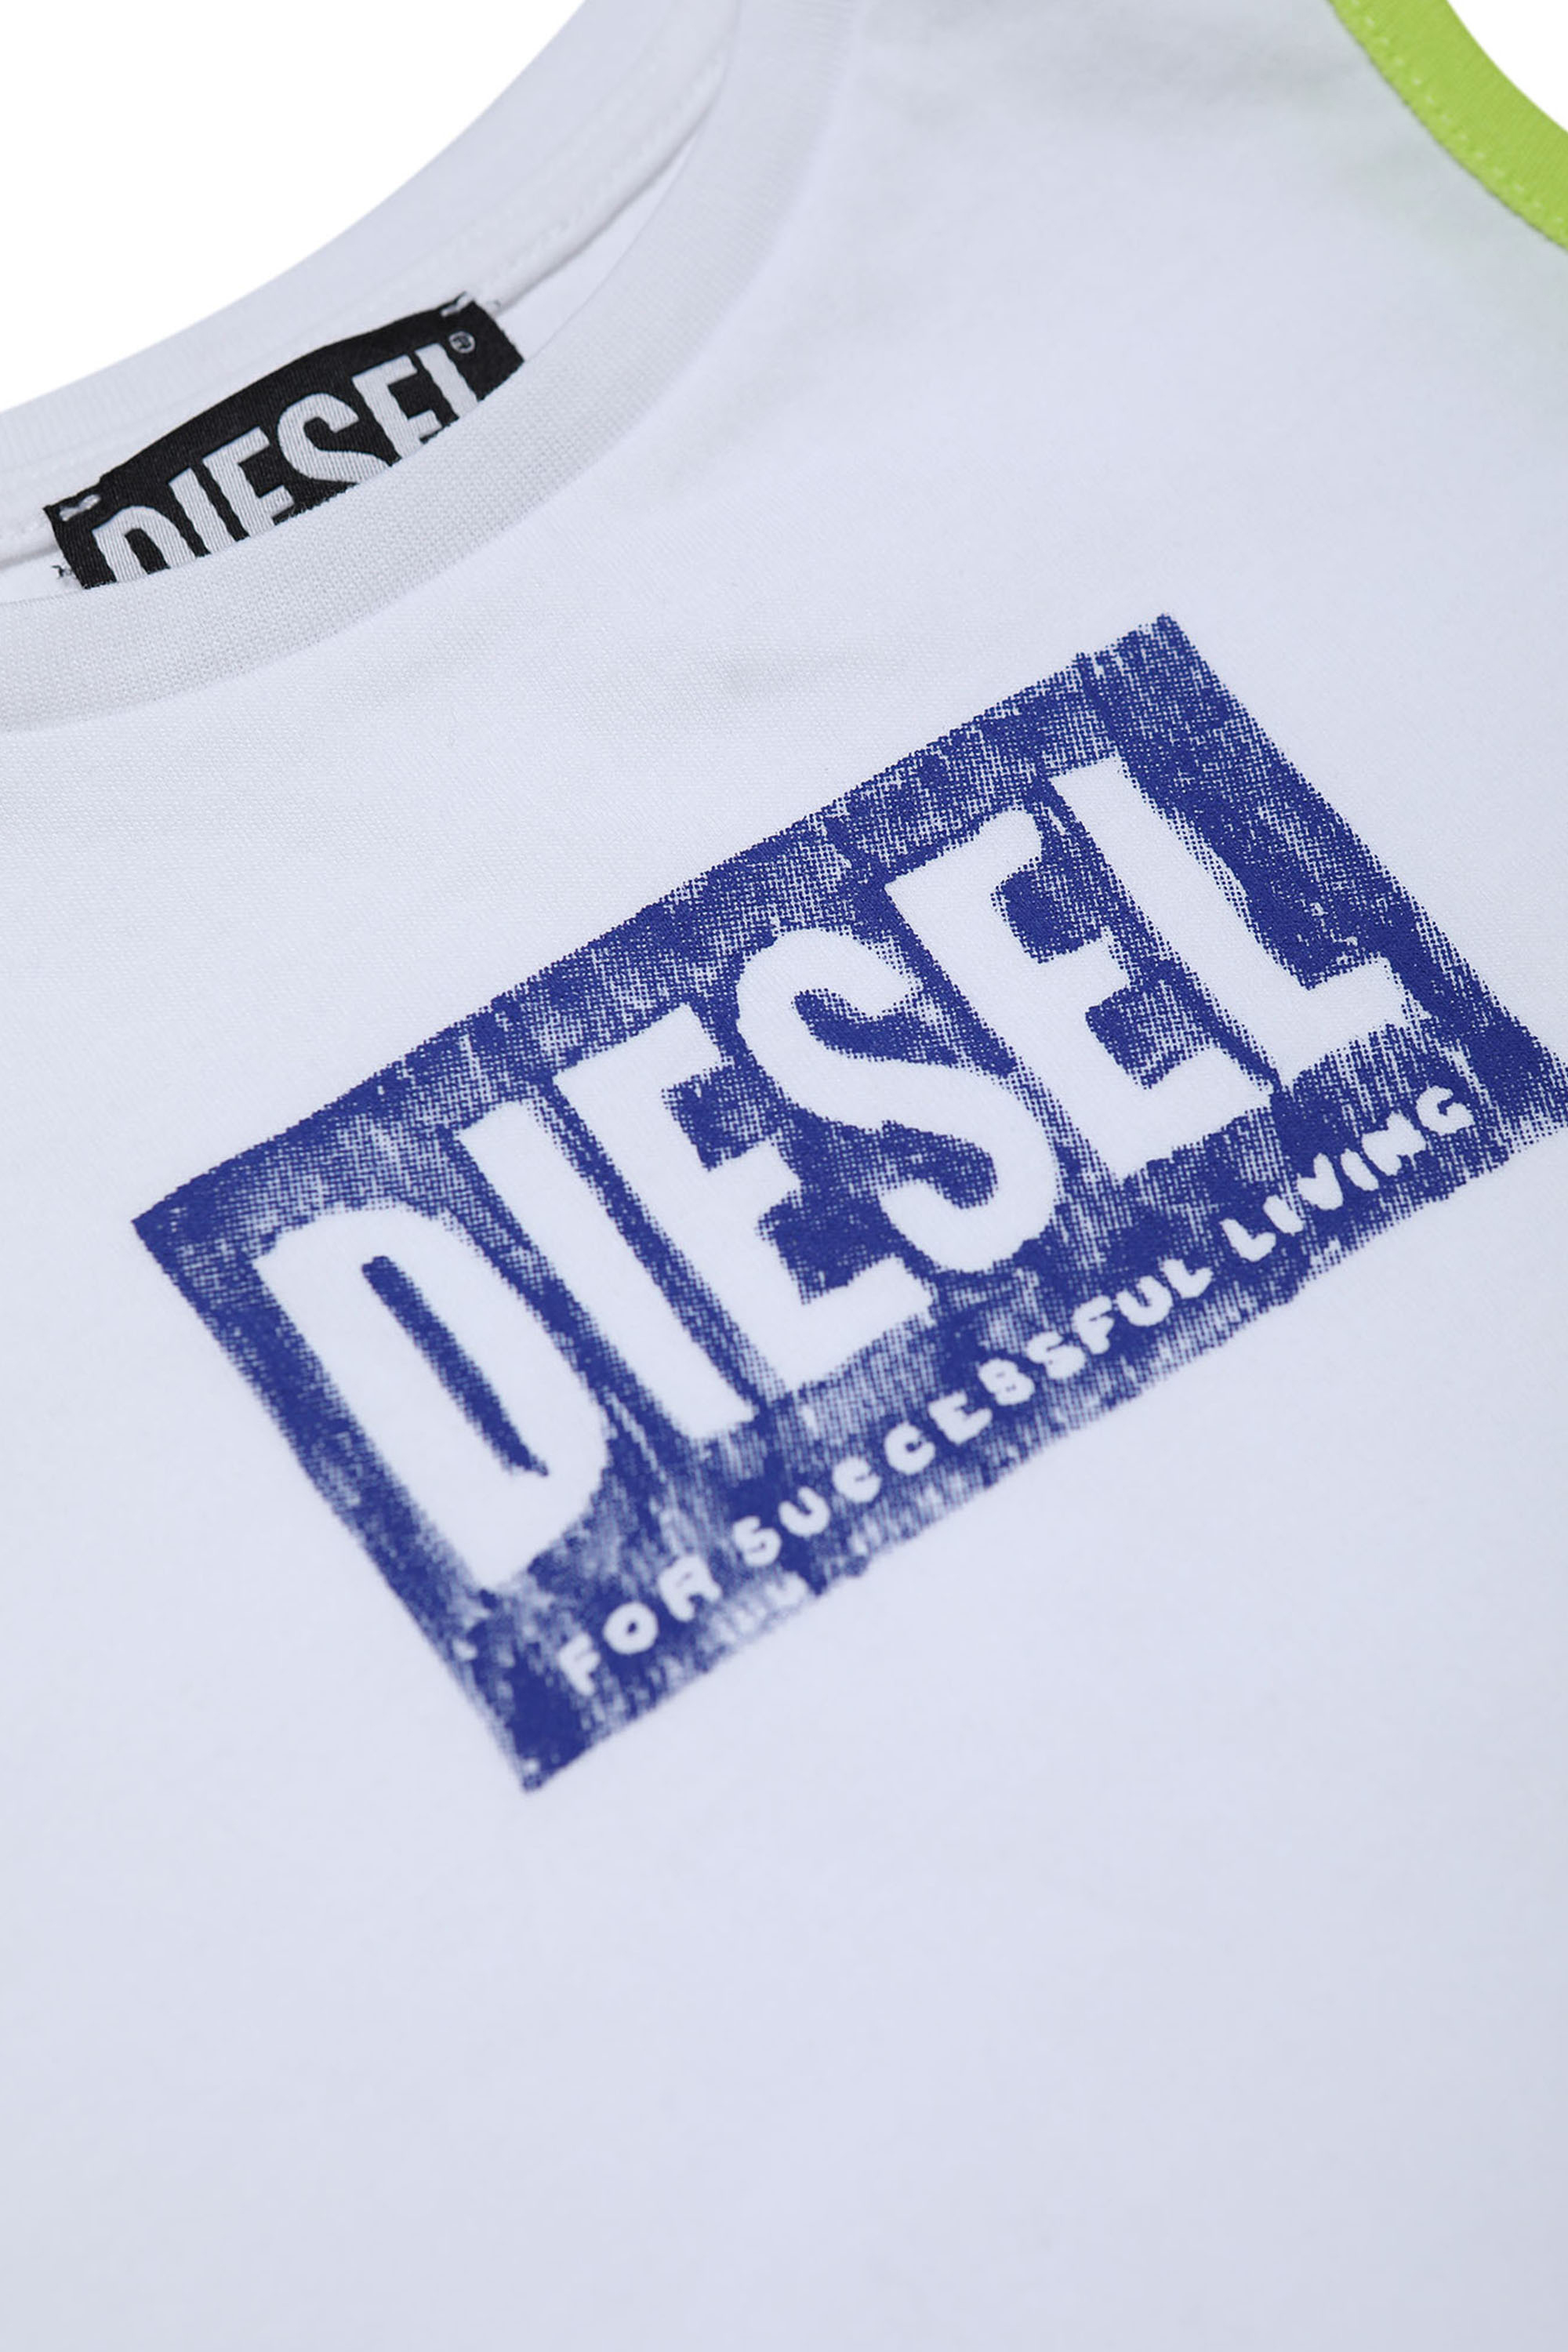 Diesel - MTURLOB, White - Image 3